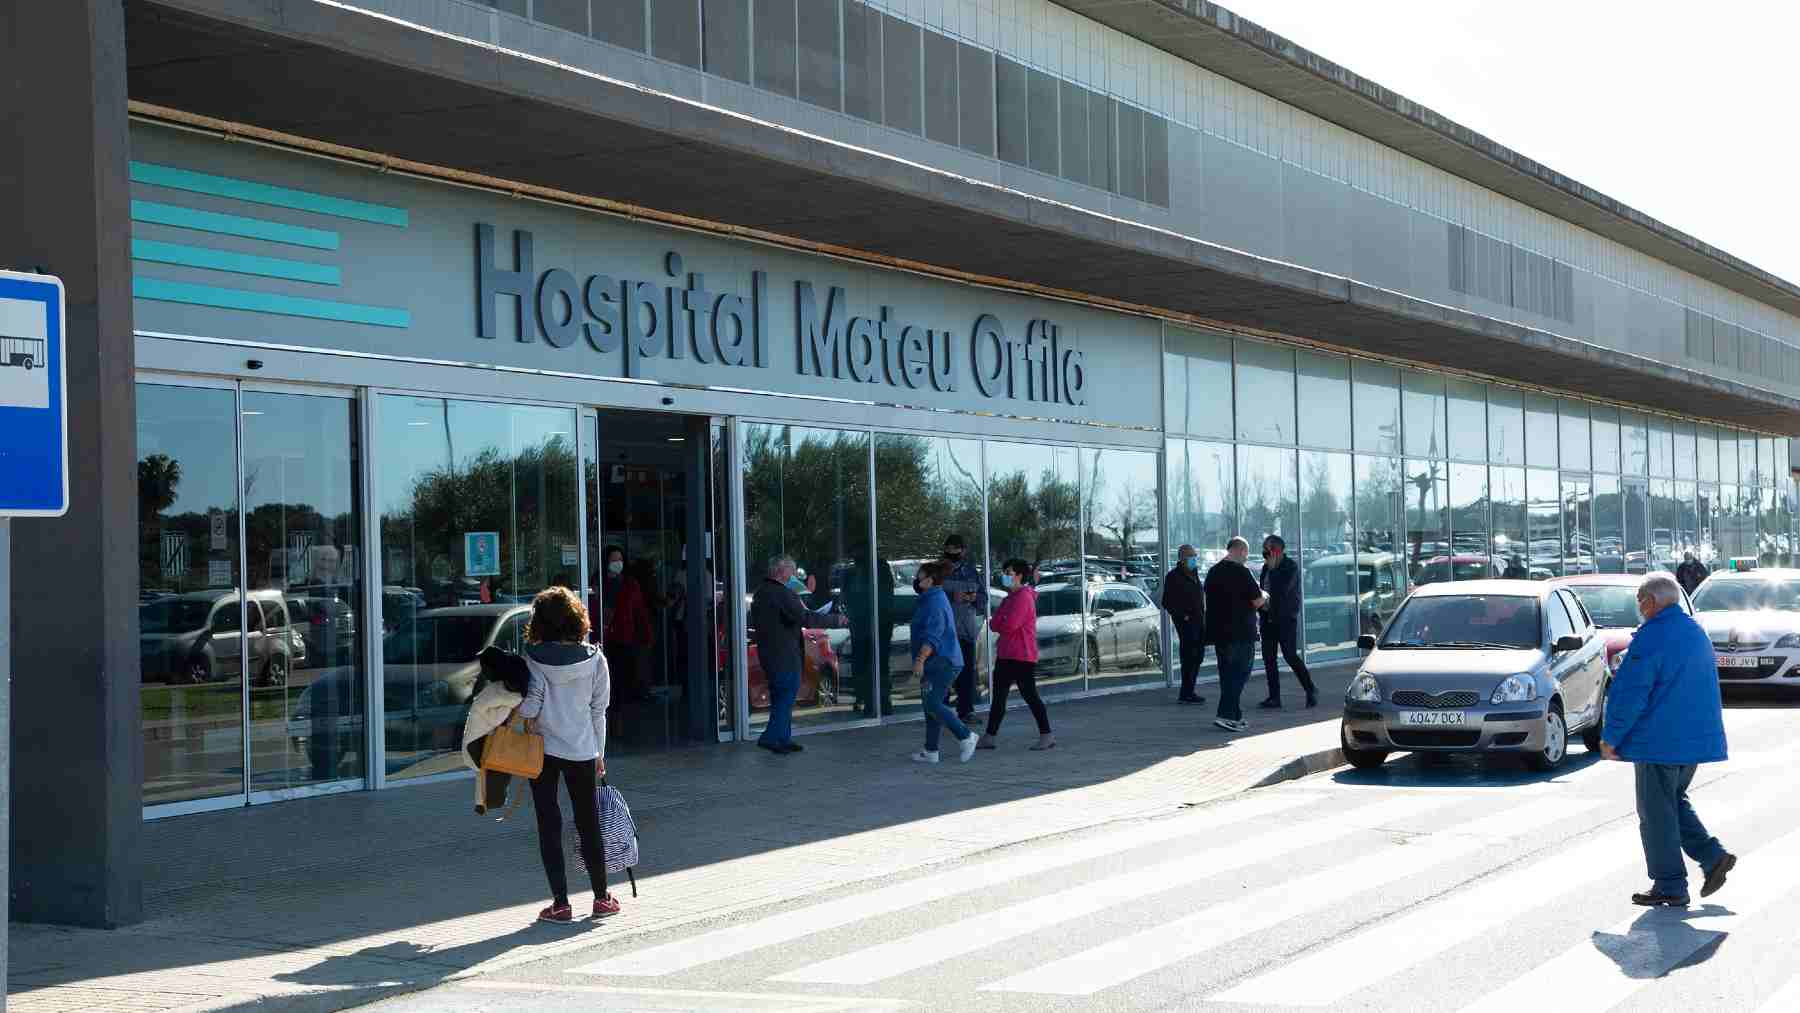 Varias personas en la entrada del Hospital Mateu Orfila de Menorca,en Mahón. Foto: Adrià Riudavets-Europa Press